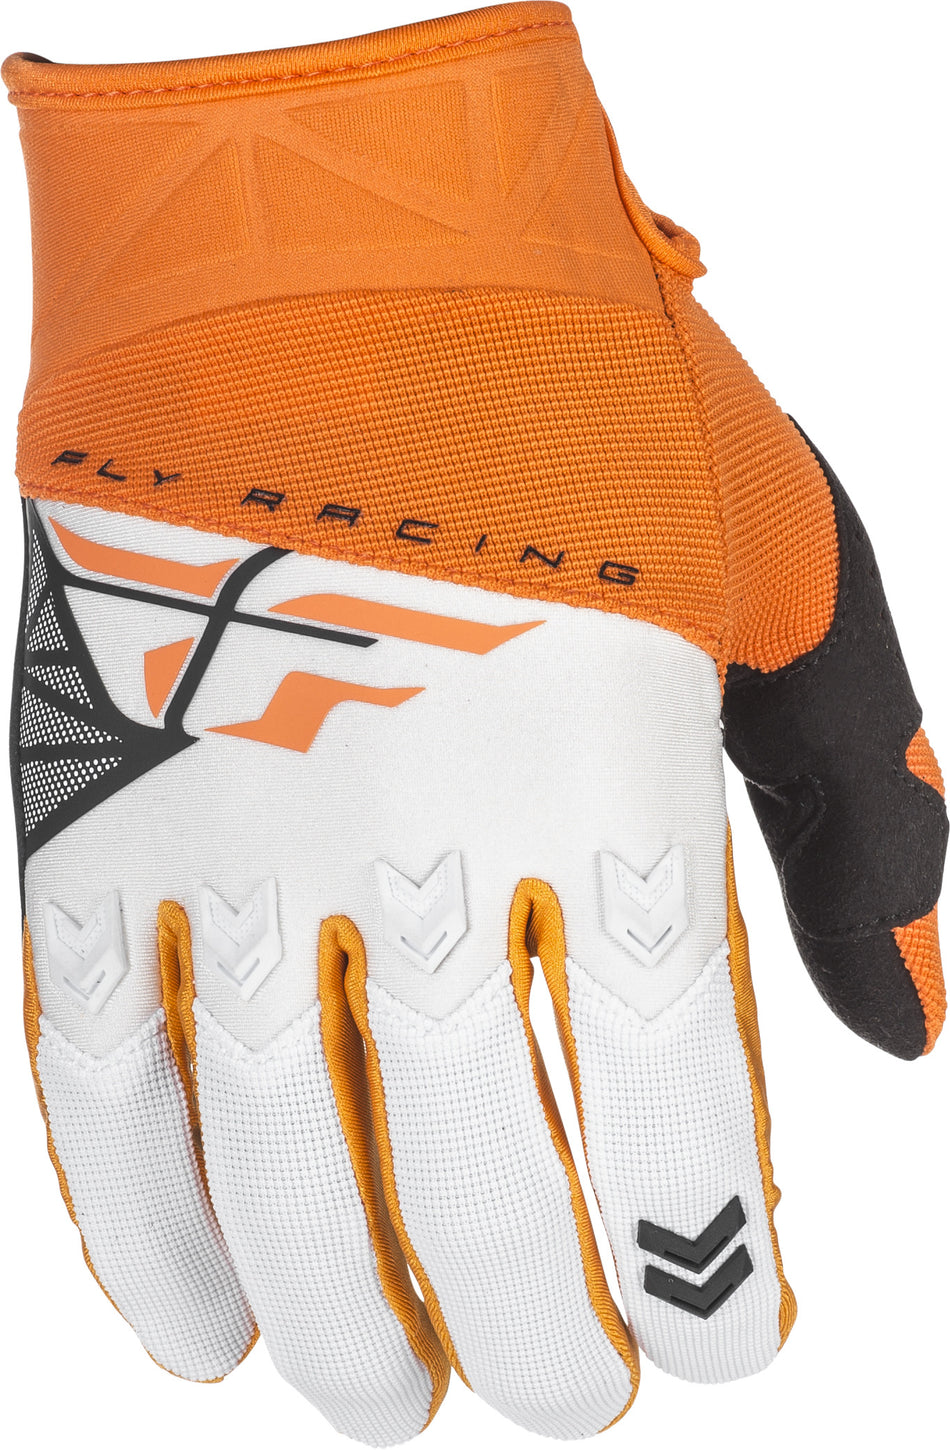 FLY RACING F-16 Gloves Orange/White Sz 12 371-91812